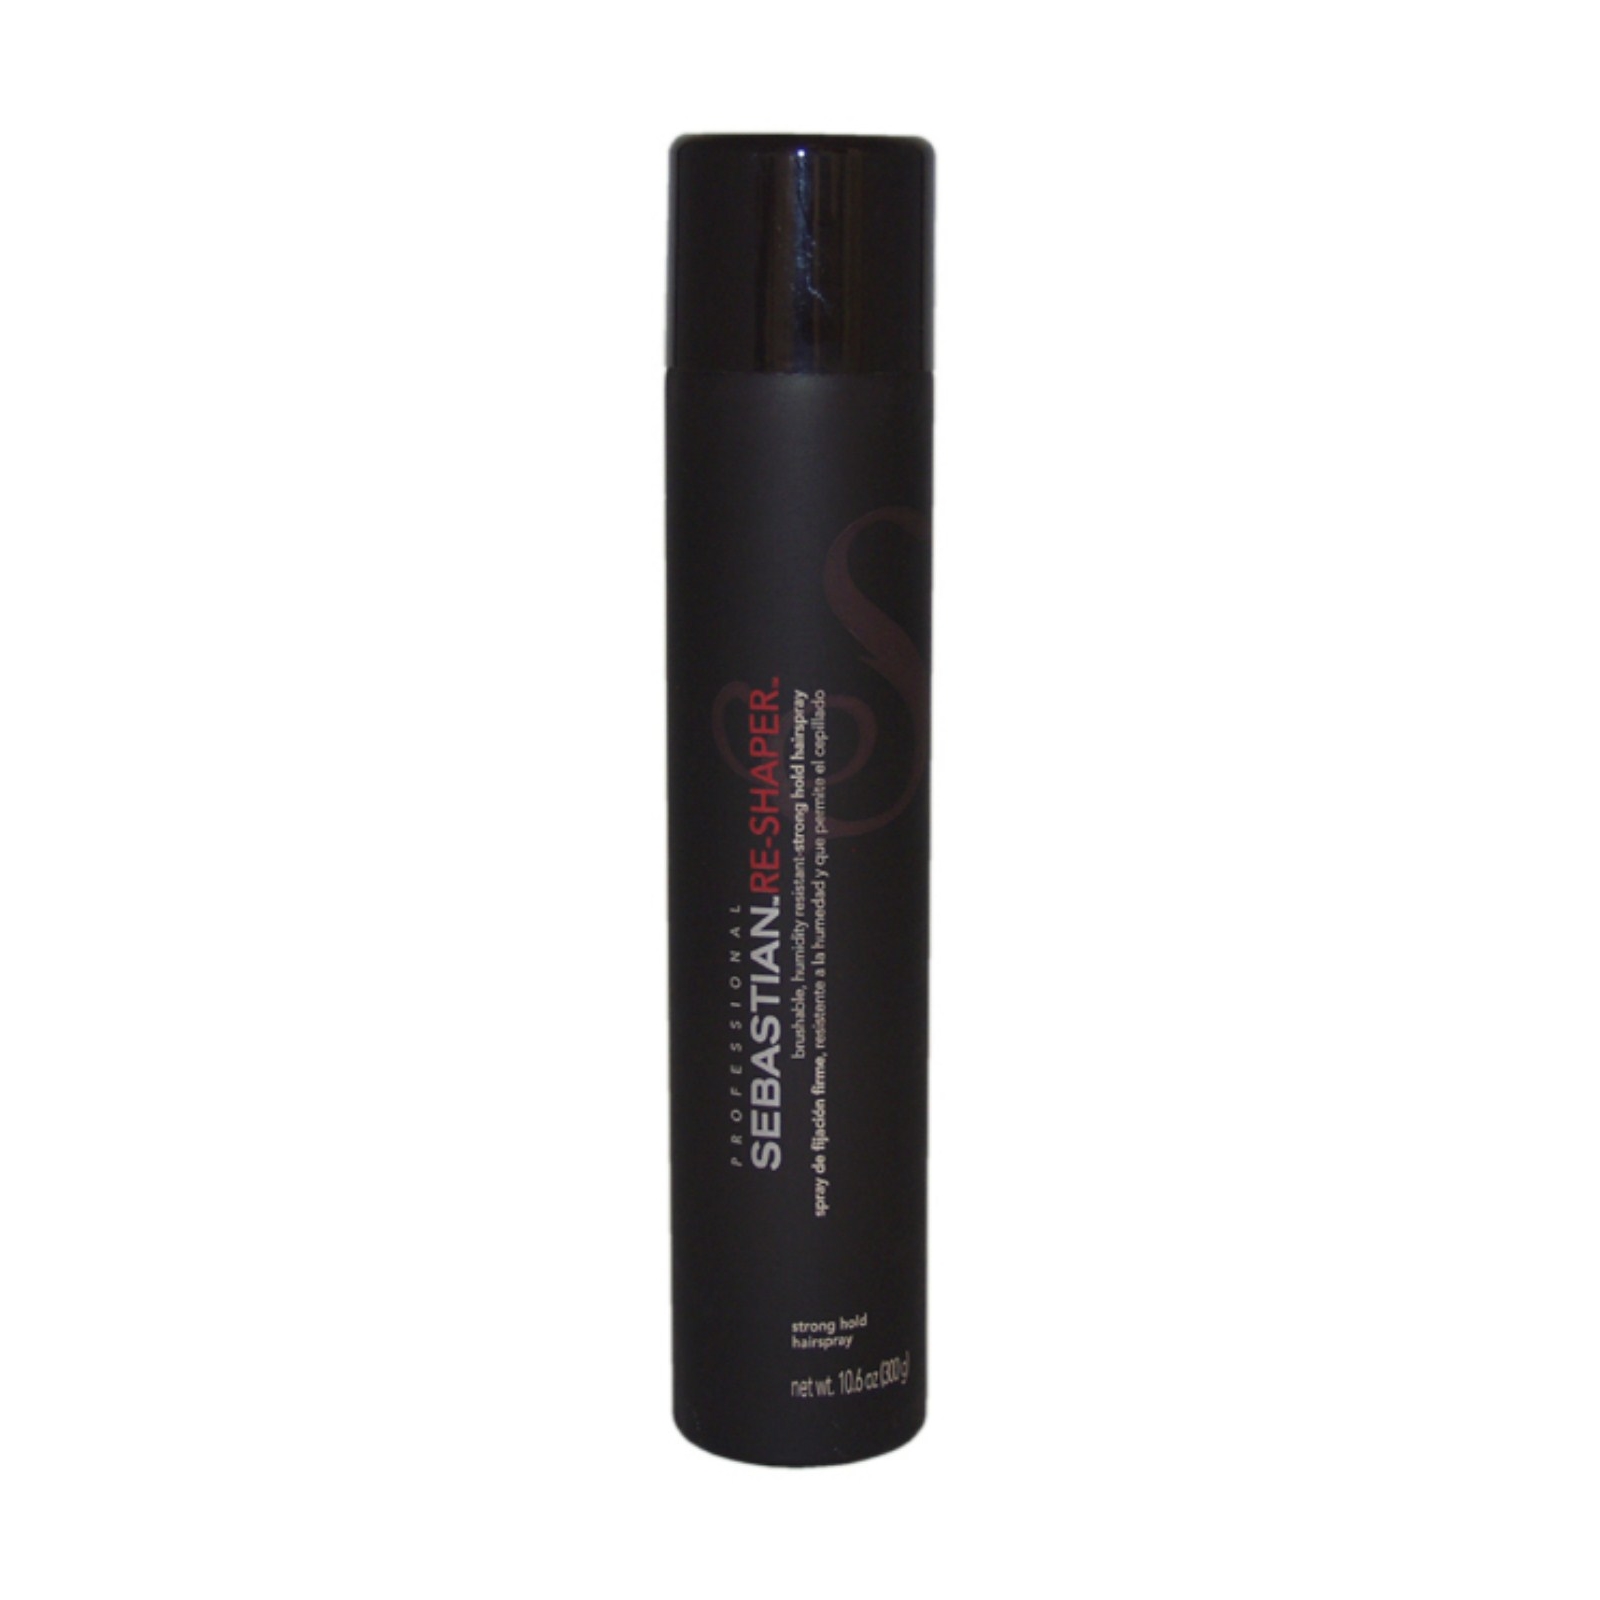 Sebastian Professional Re-shaper Hair Spray by  for Unisex - 10.6 oz Styling